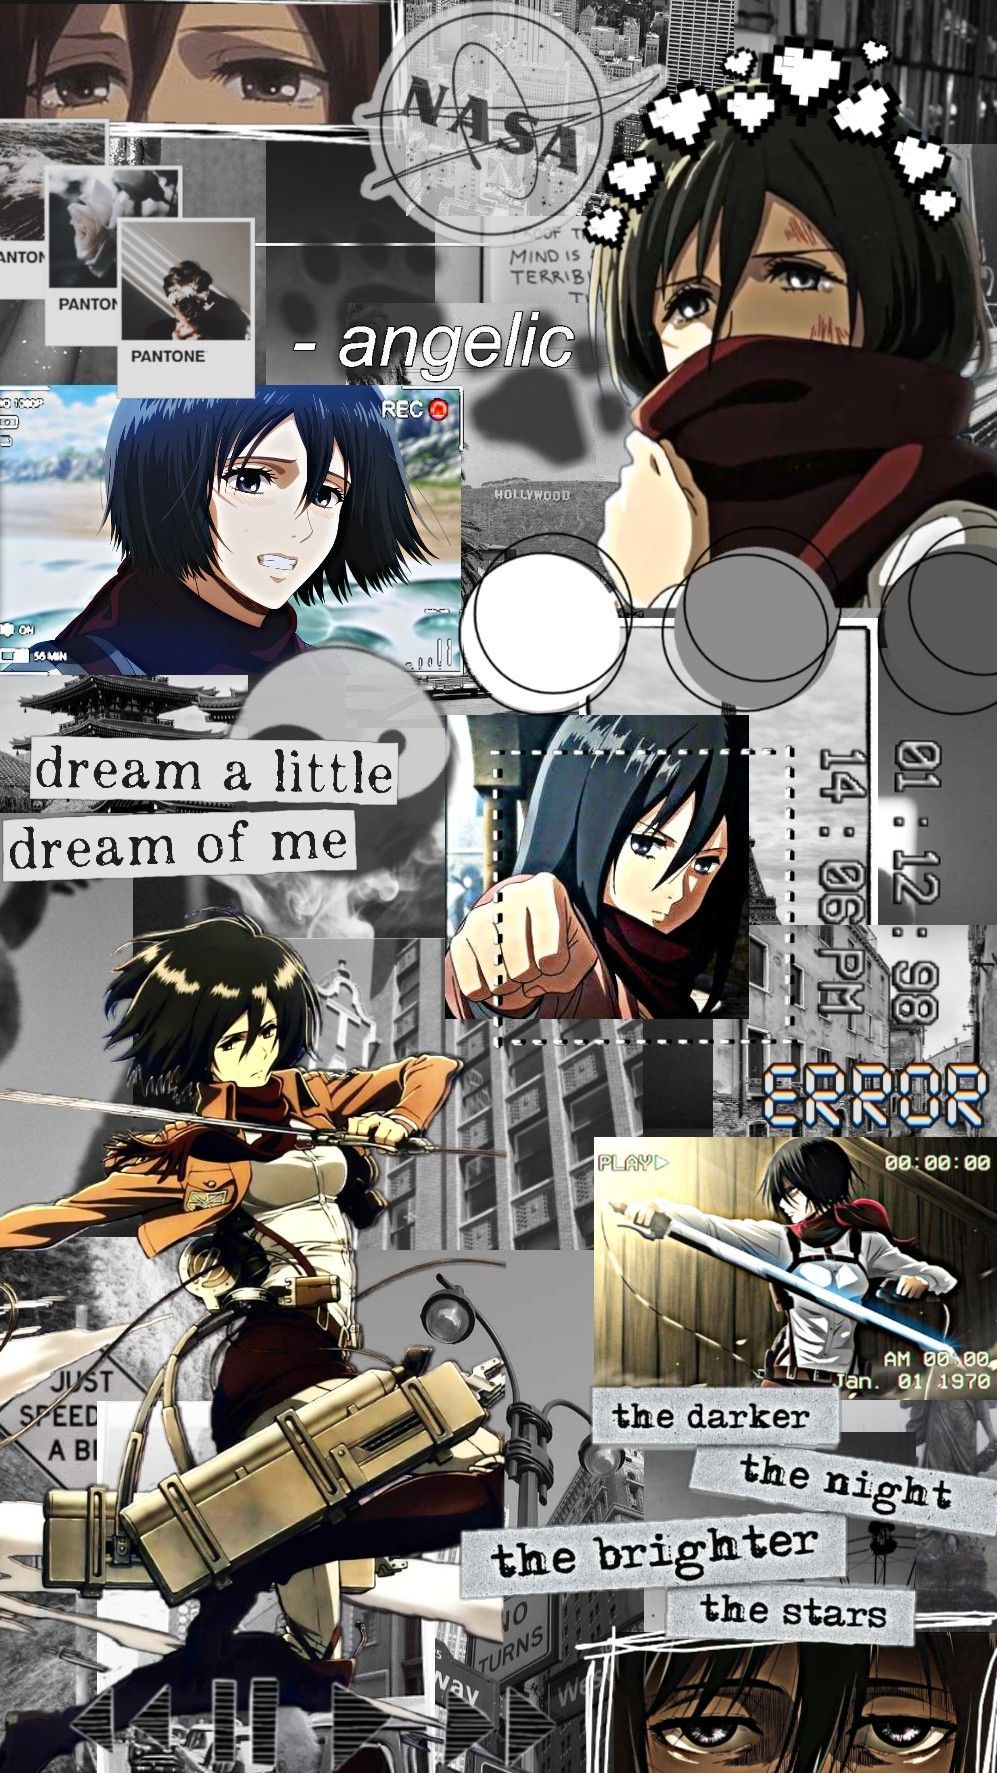 Mikasa Ackerman aesthetic wallpaper. Ilustrasi lucu, Gambar karakter, Wallpaper anime